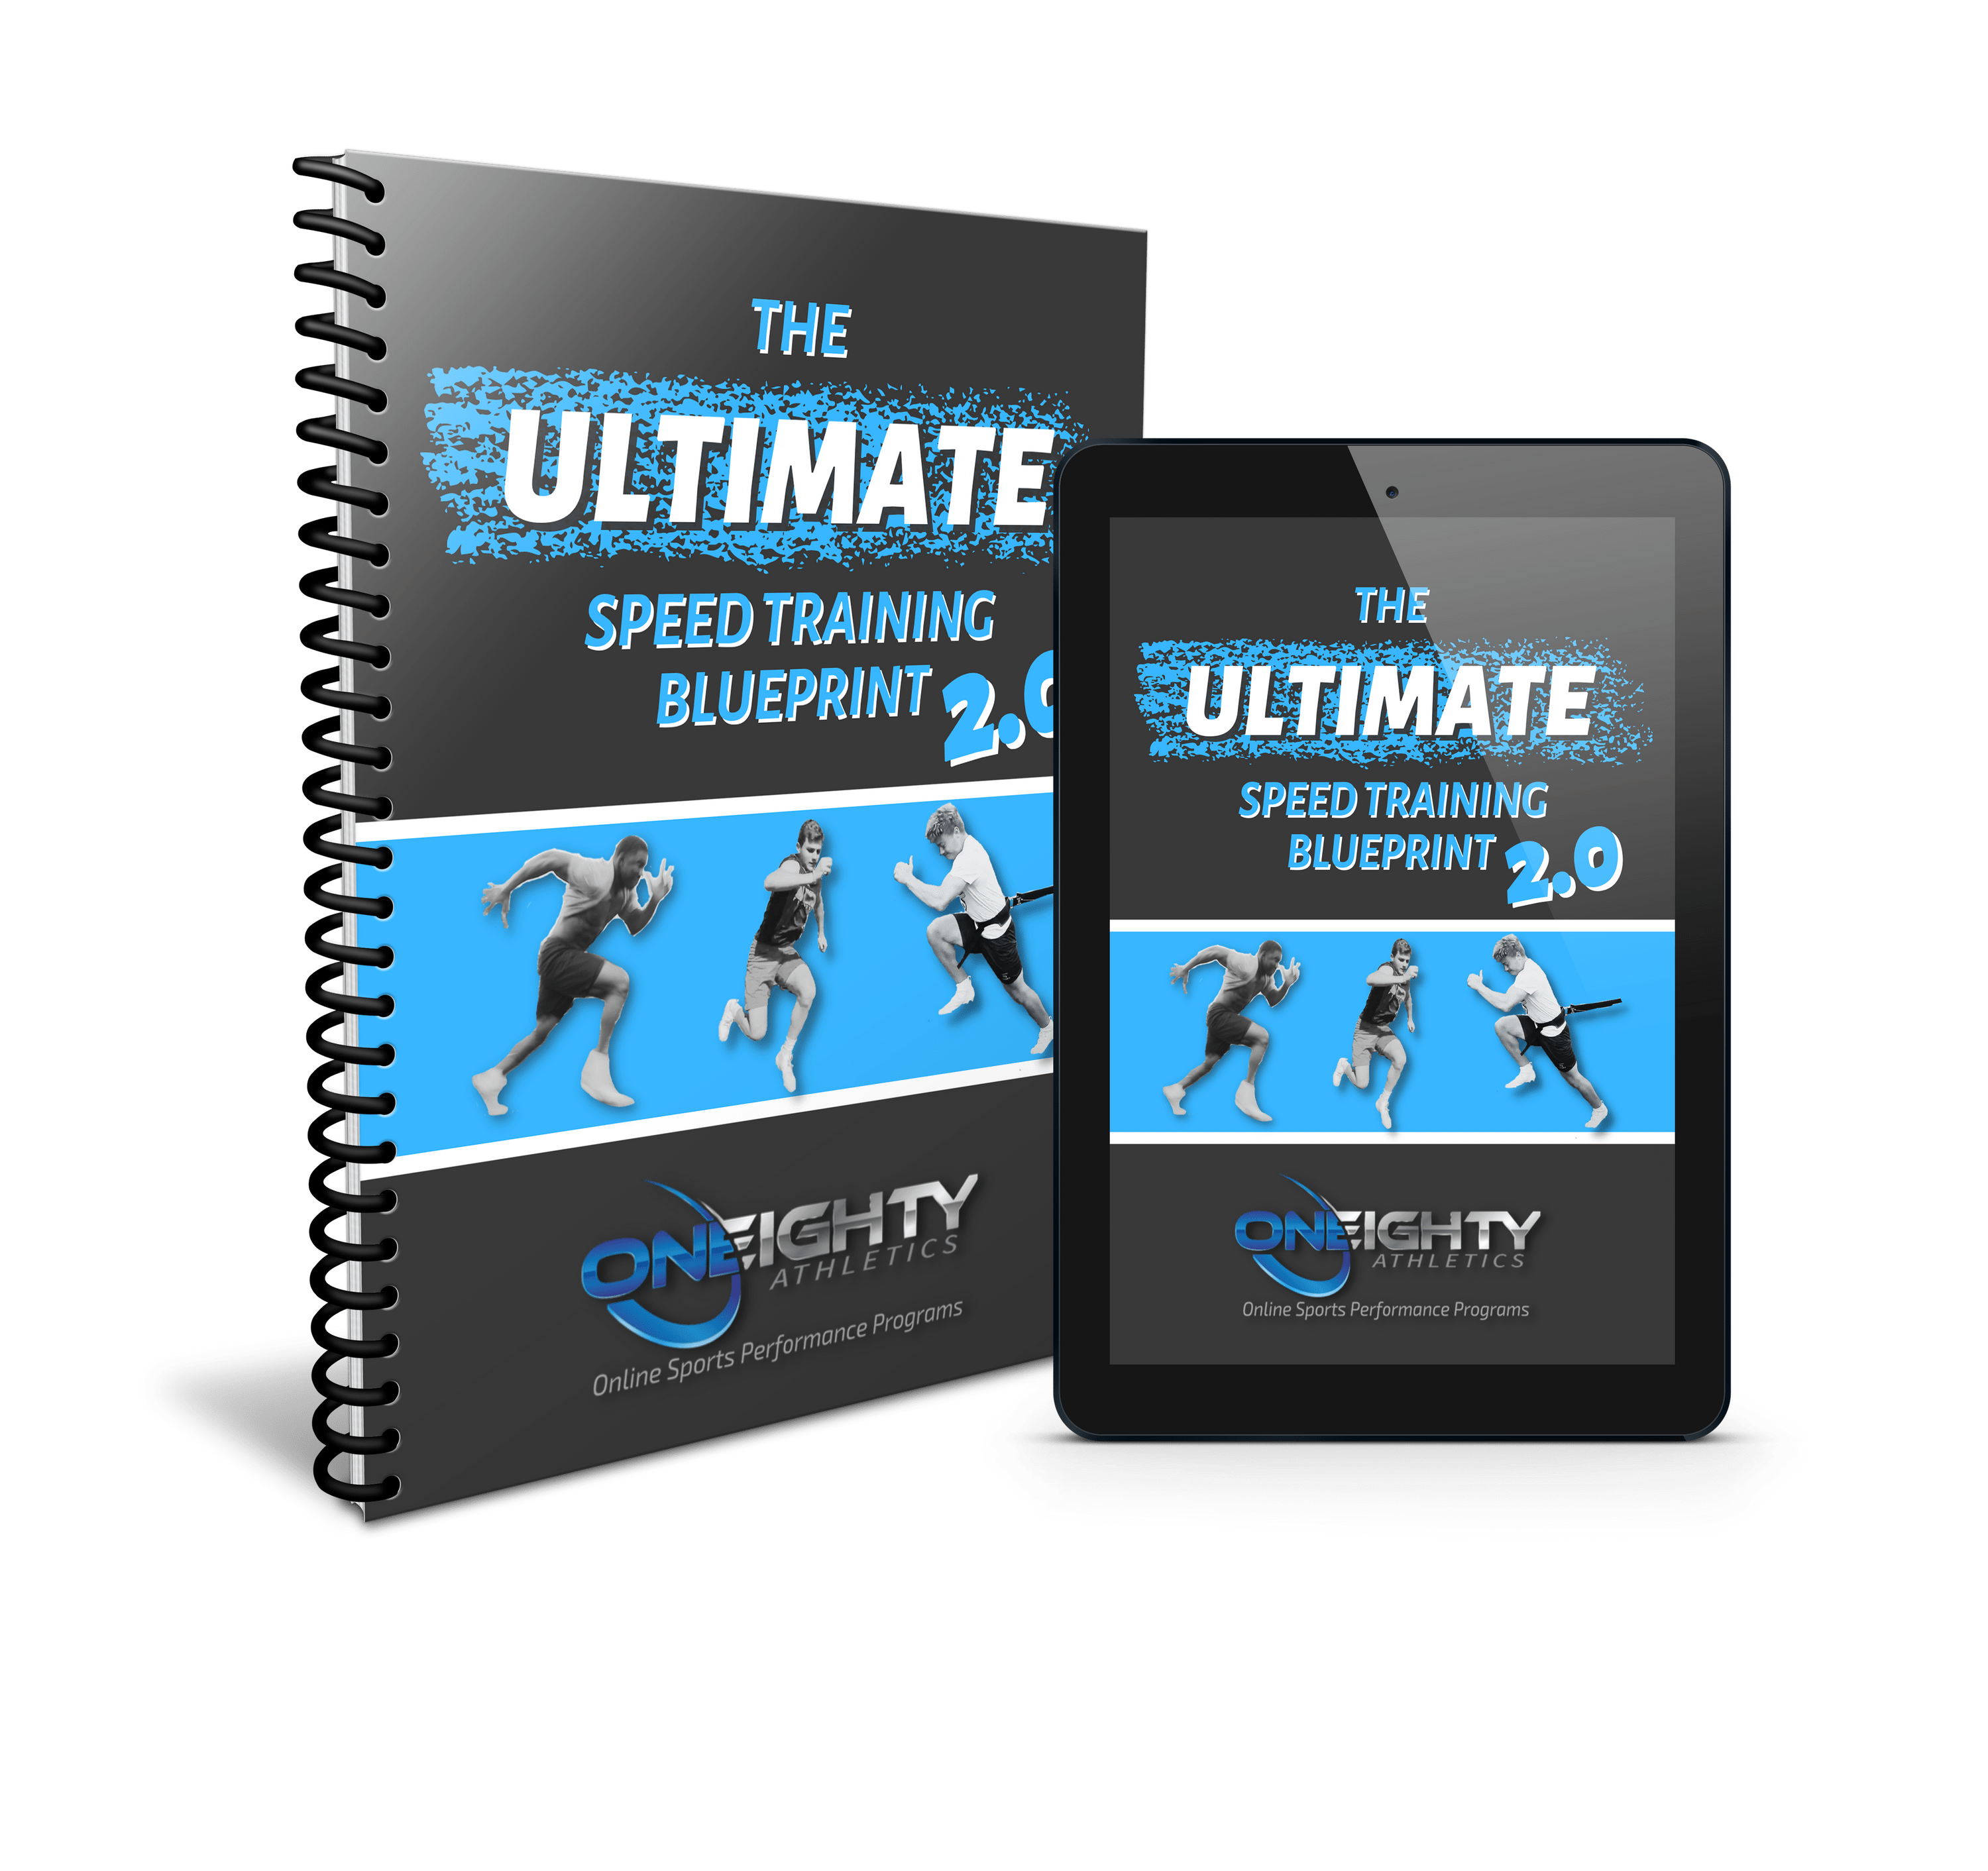 The Ultimate Speed Training Blueprint 2.0